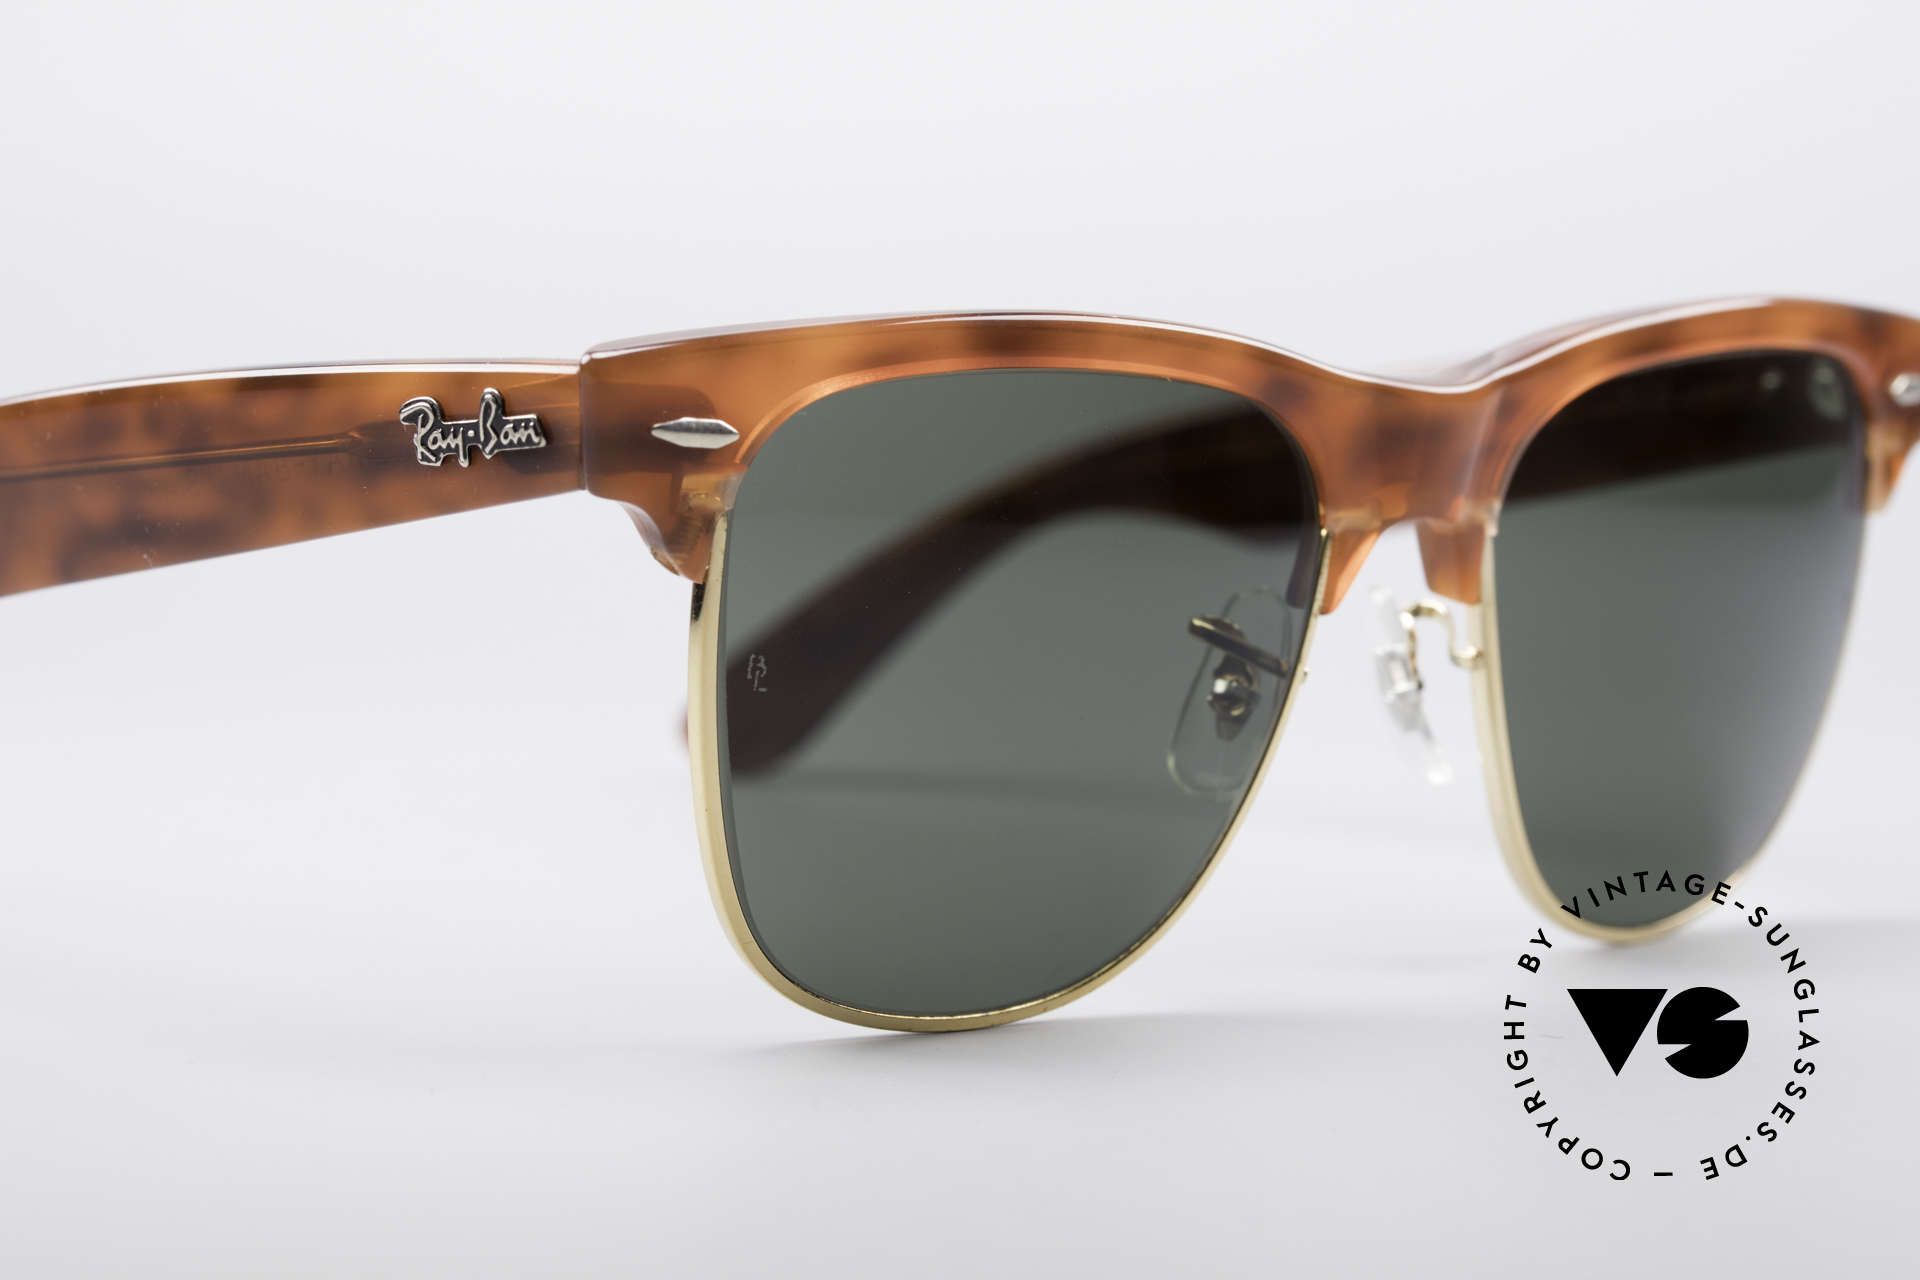 Sunglasses Ray Ban Wayfarer Max II B&L USA Sunglasses